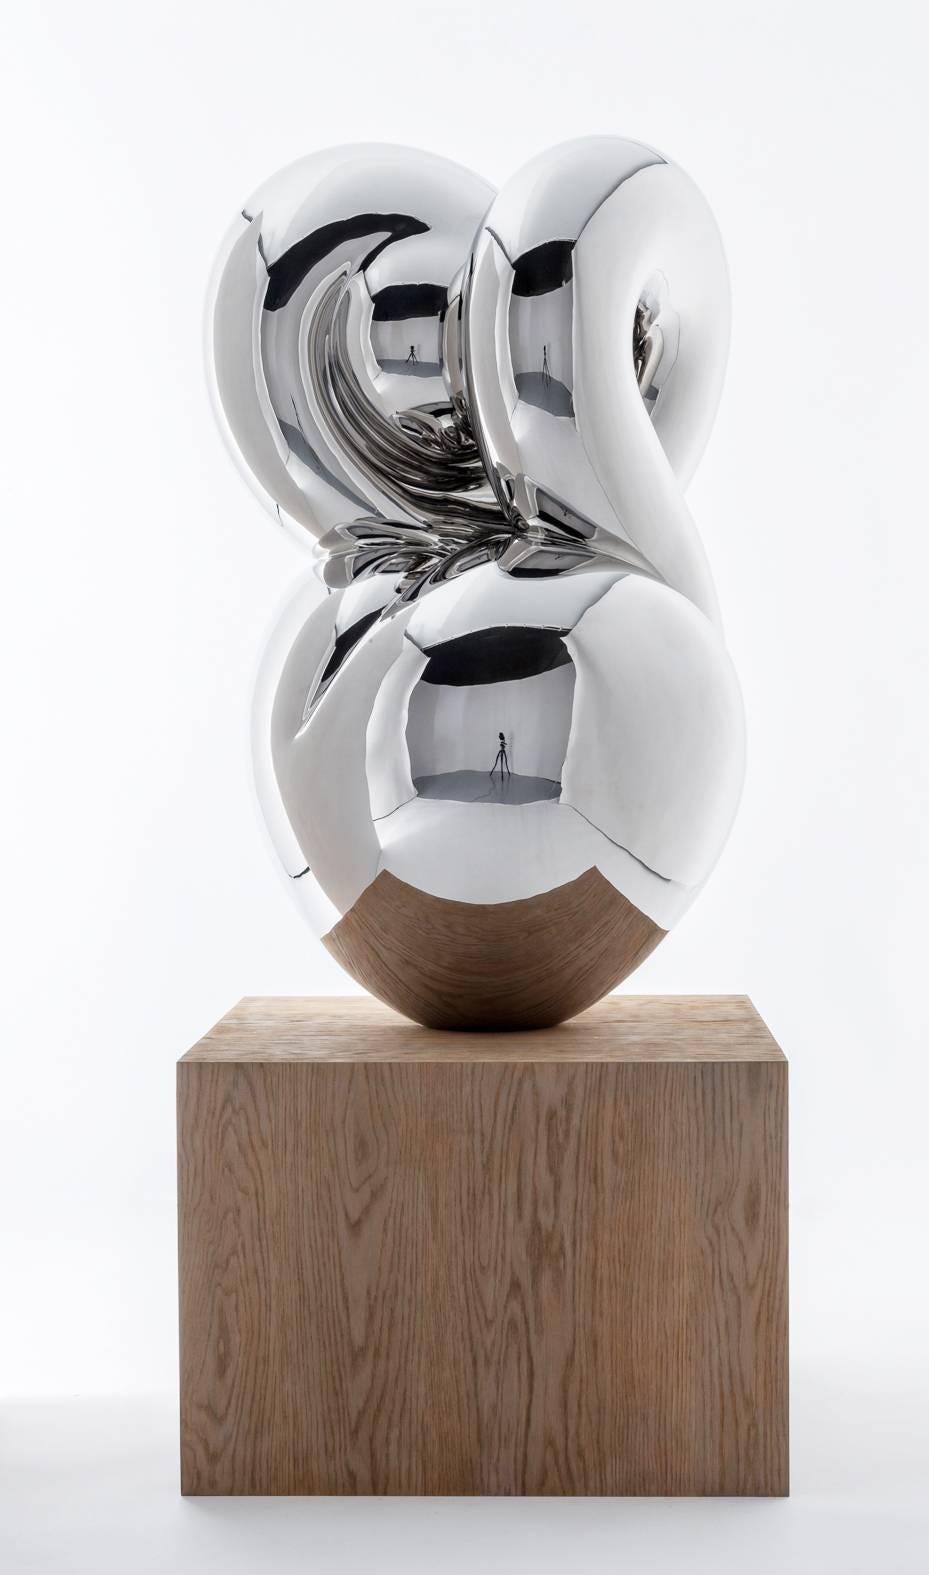 Twice - Sculpture by Richard Hudson